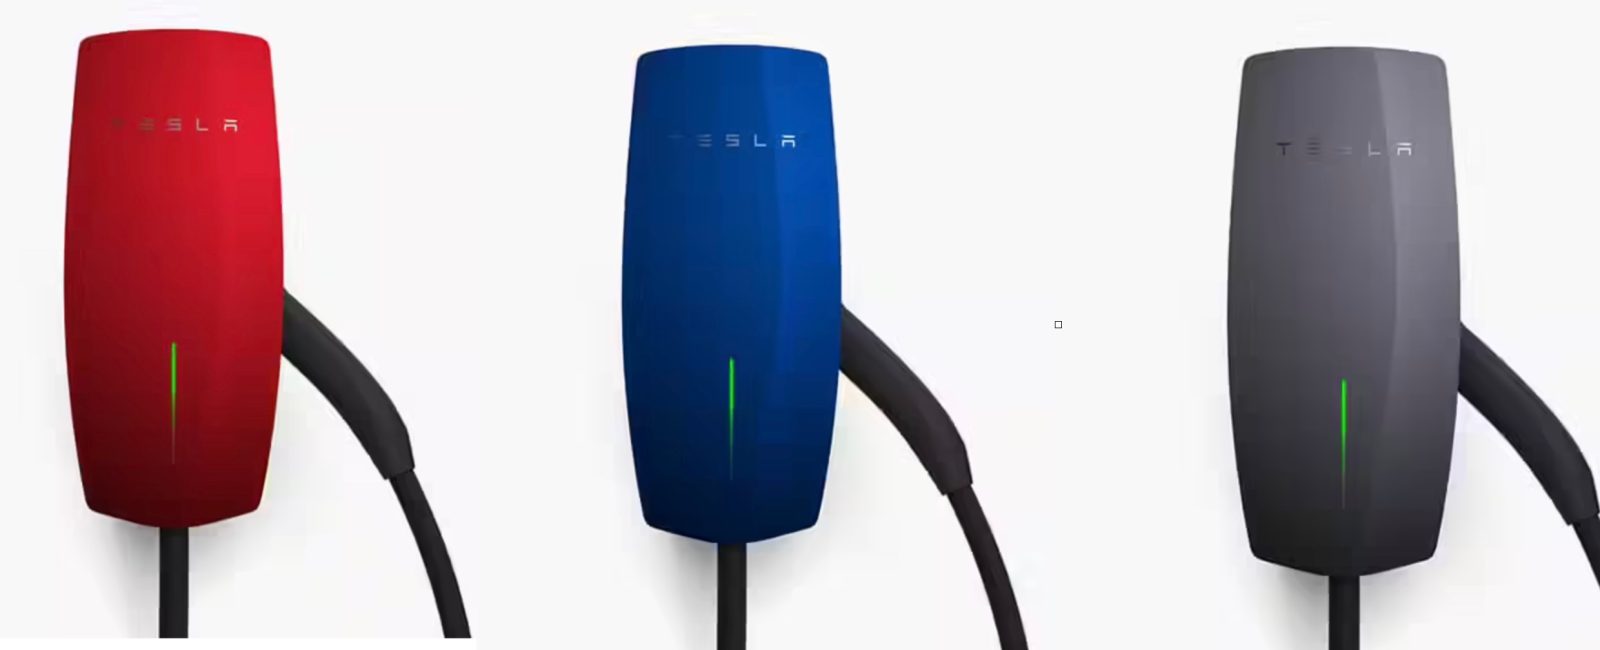 First look at Tesla's newest Wall Connector: Sleek, lightweight